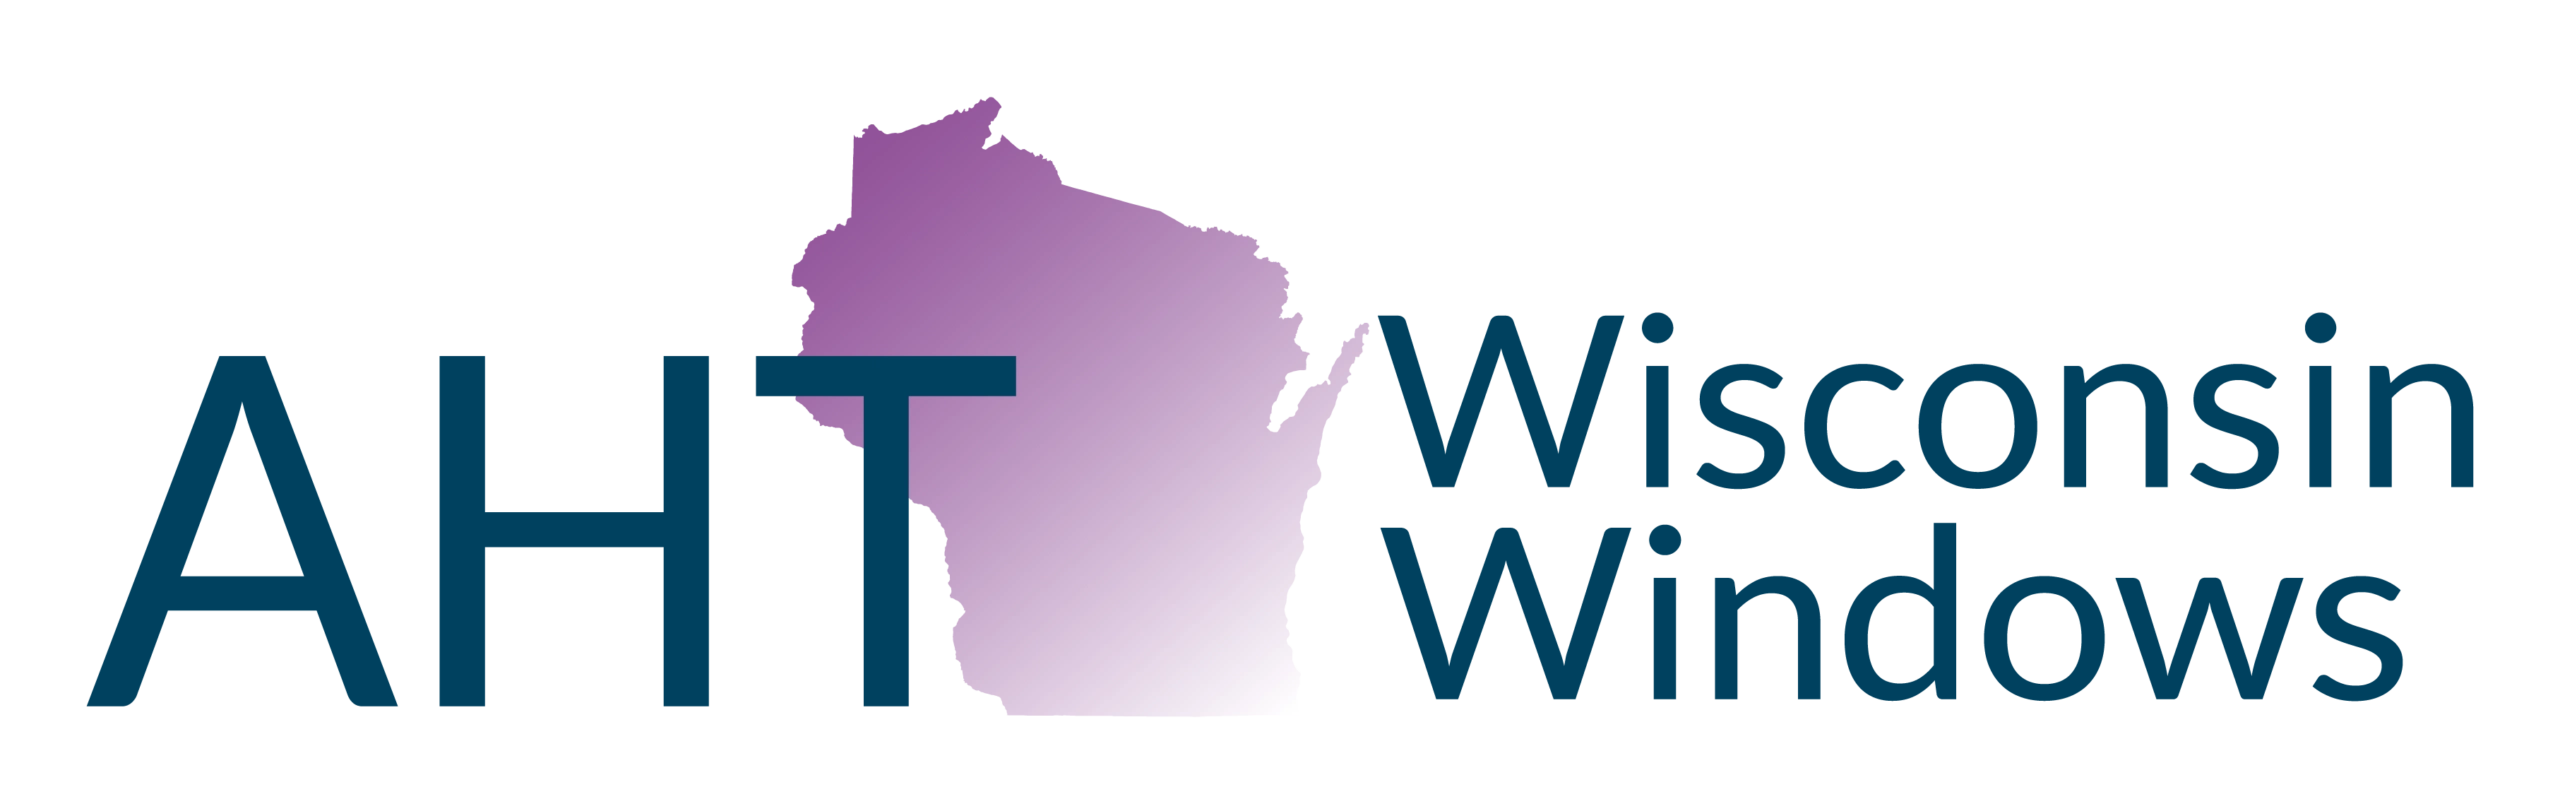 AHT Wisconsin Windows Logo